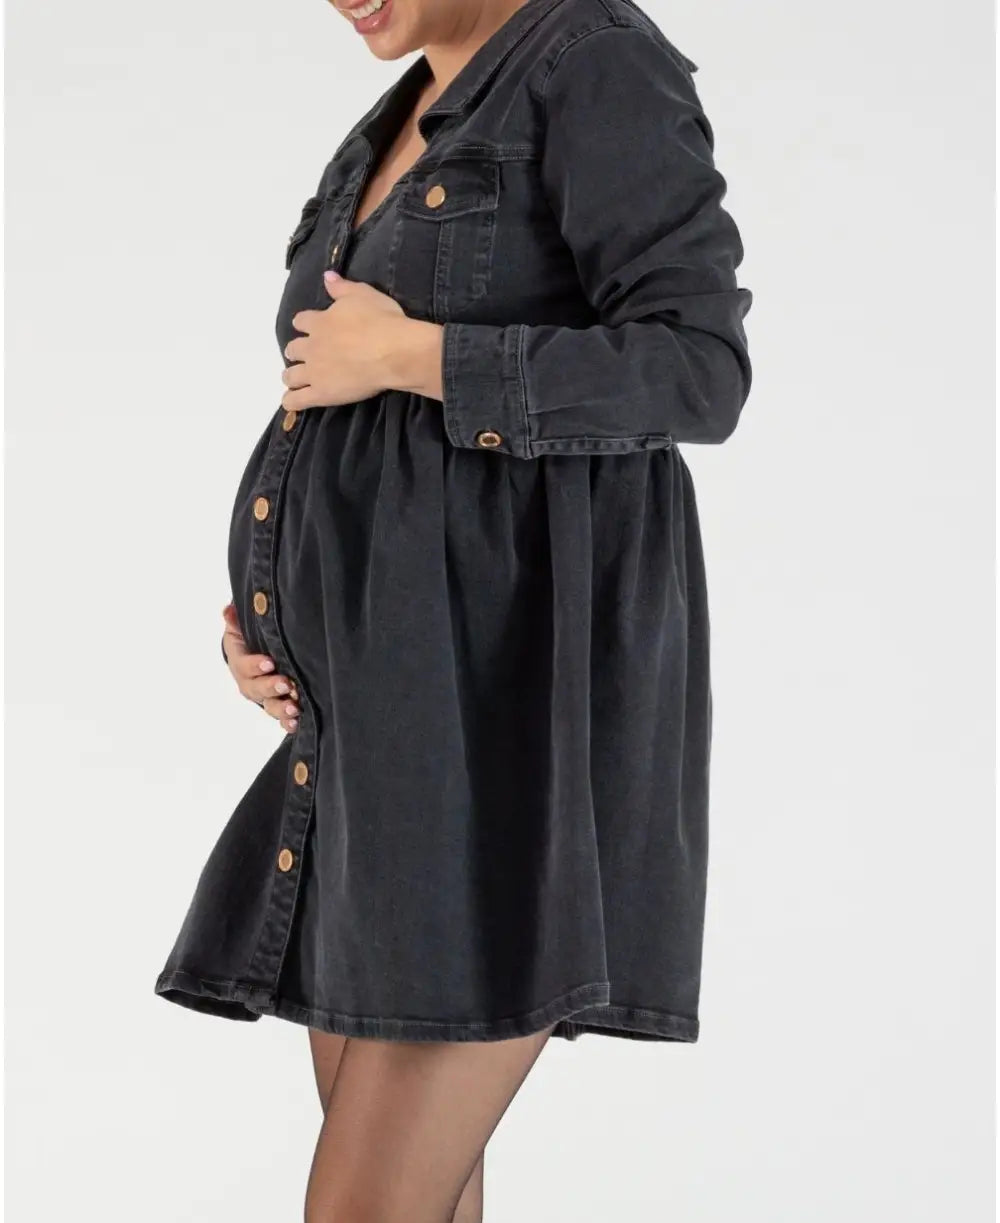 Short denim dress for pregnancy and nursing Nina grey